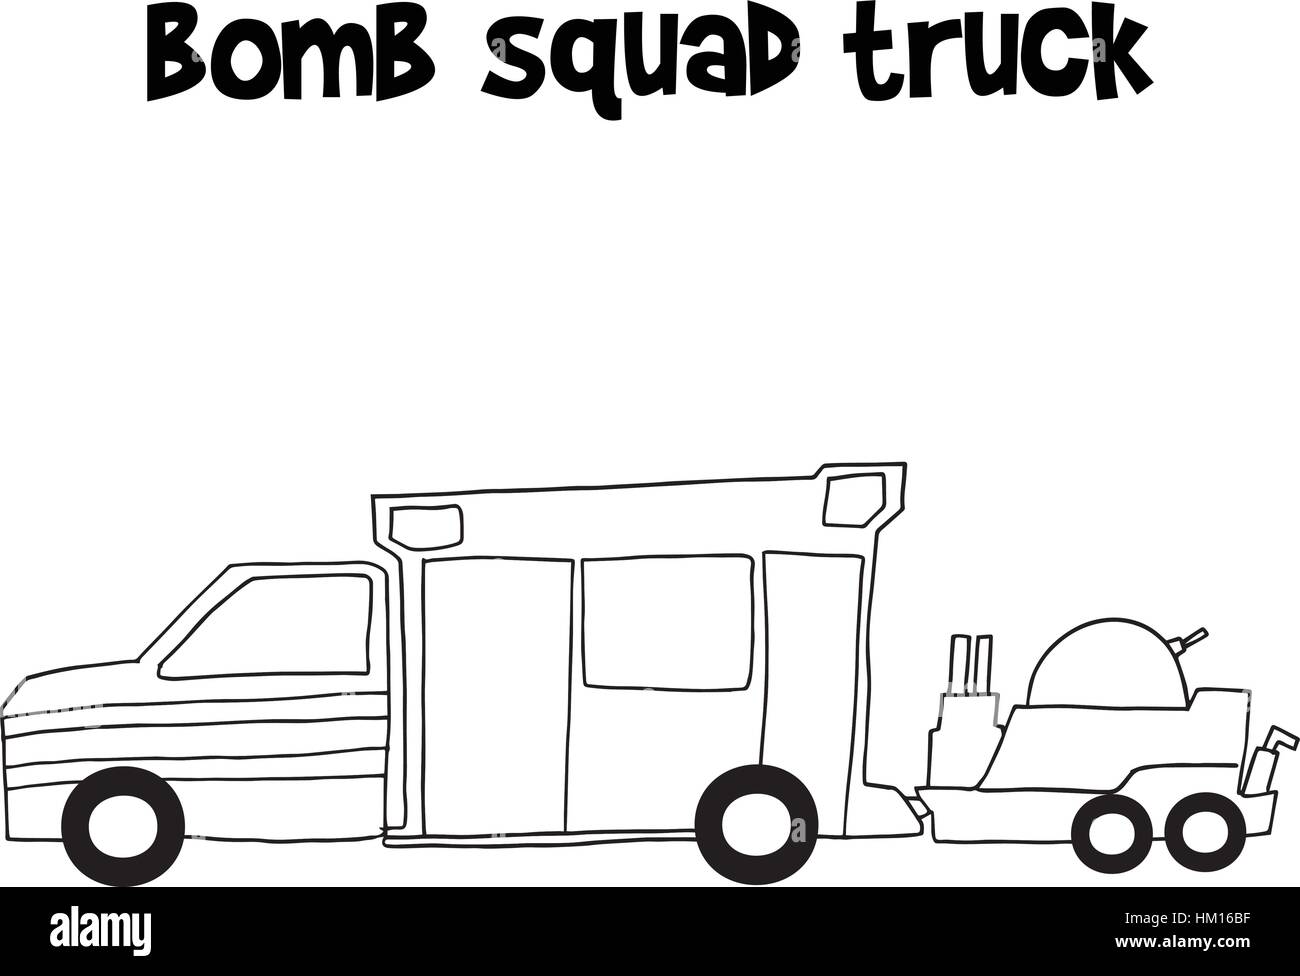 Bomb squad truck vector illustration Stock Vector